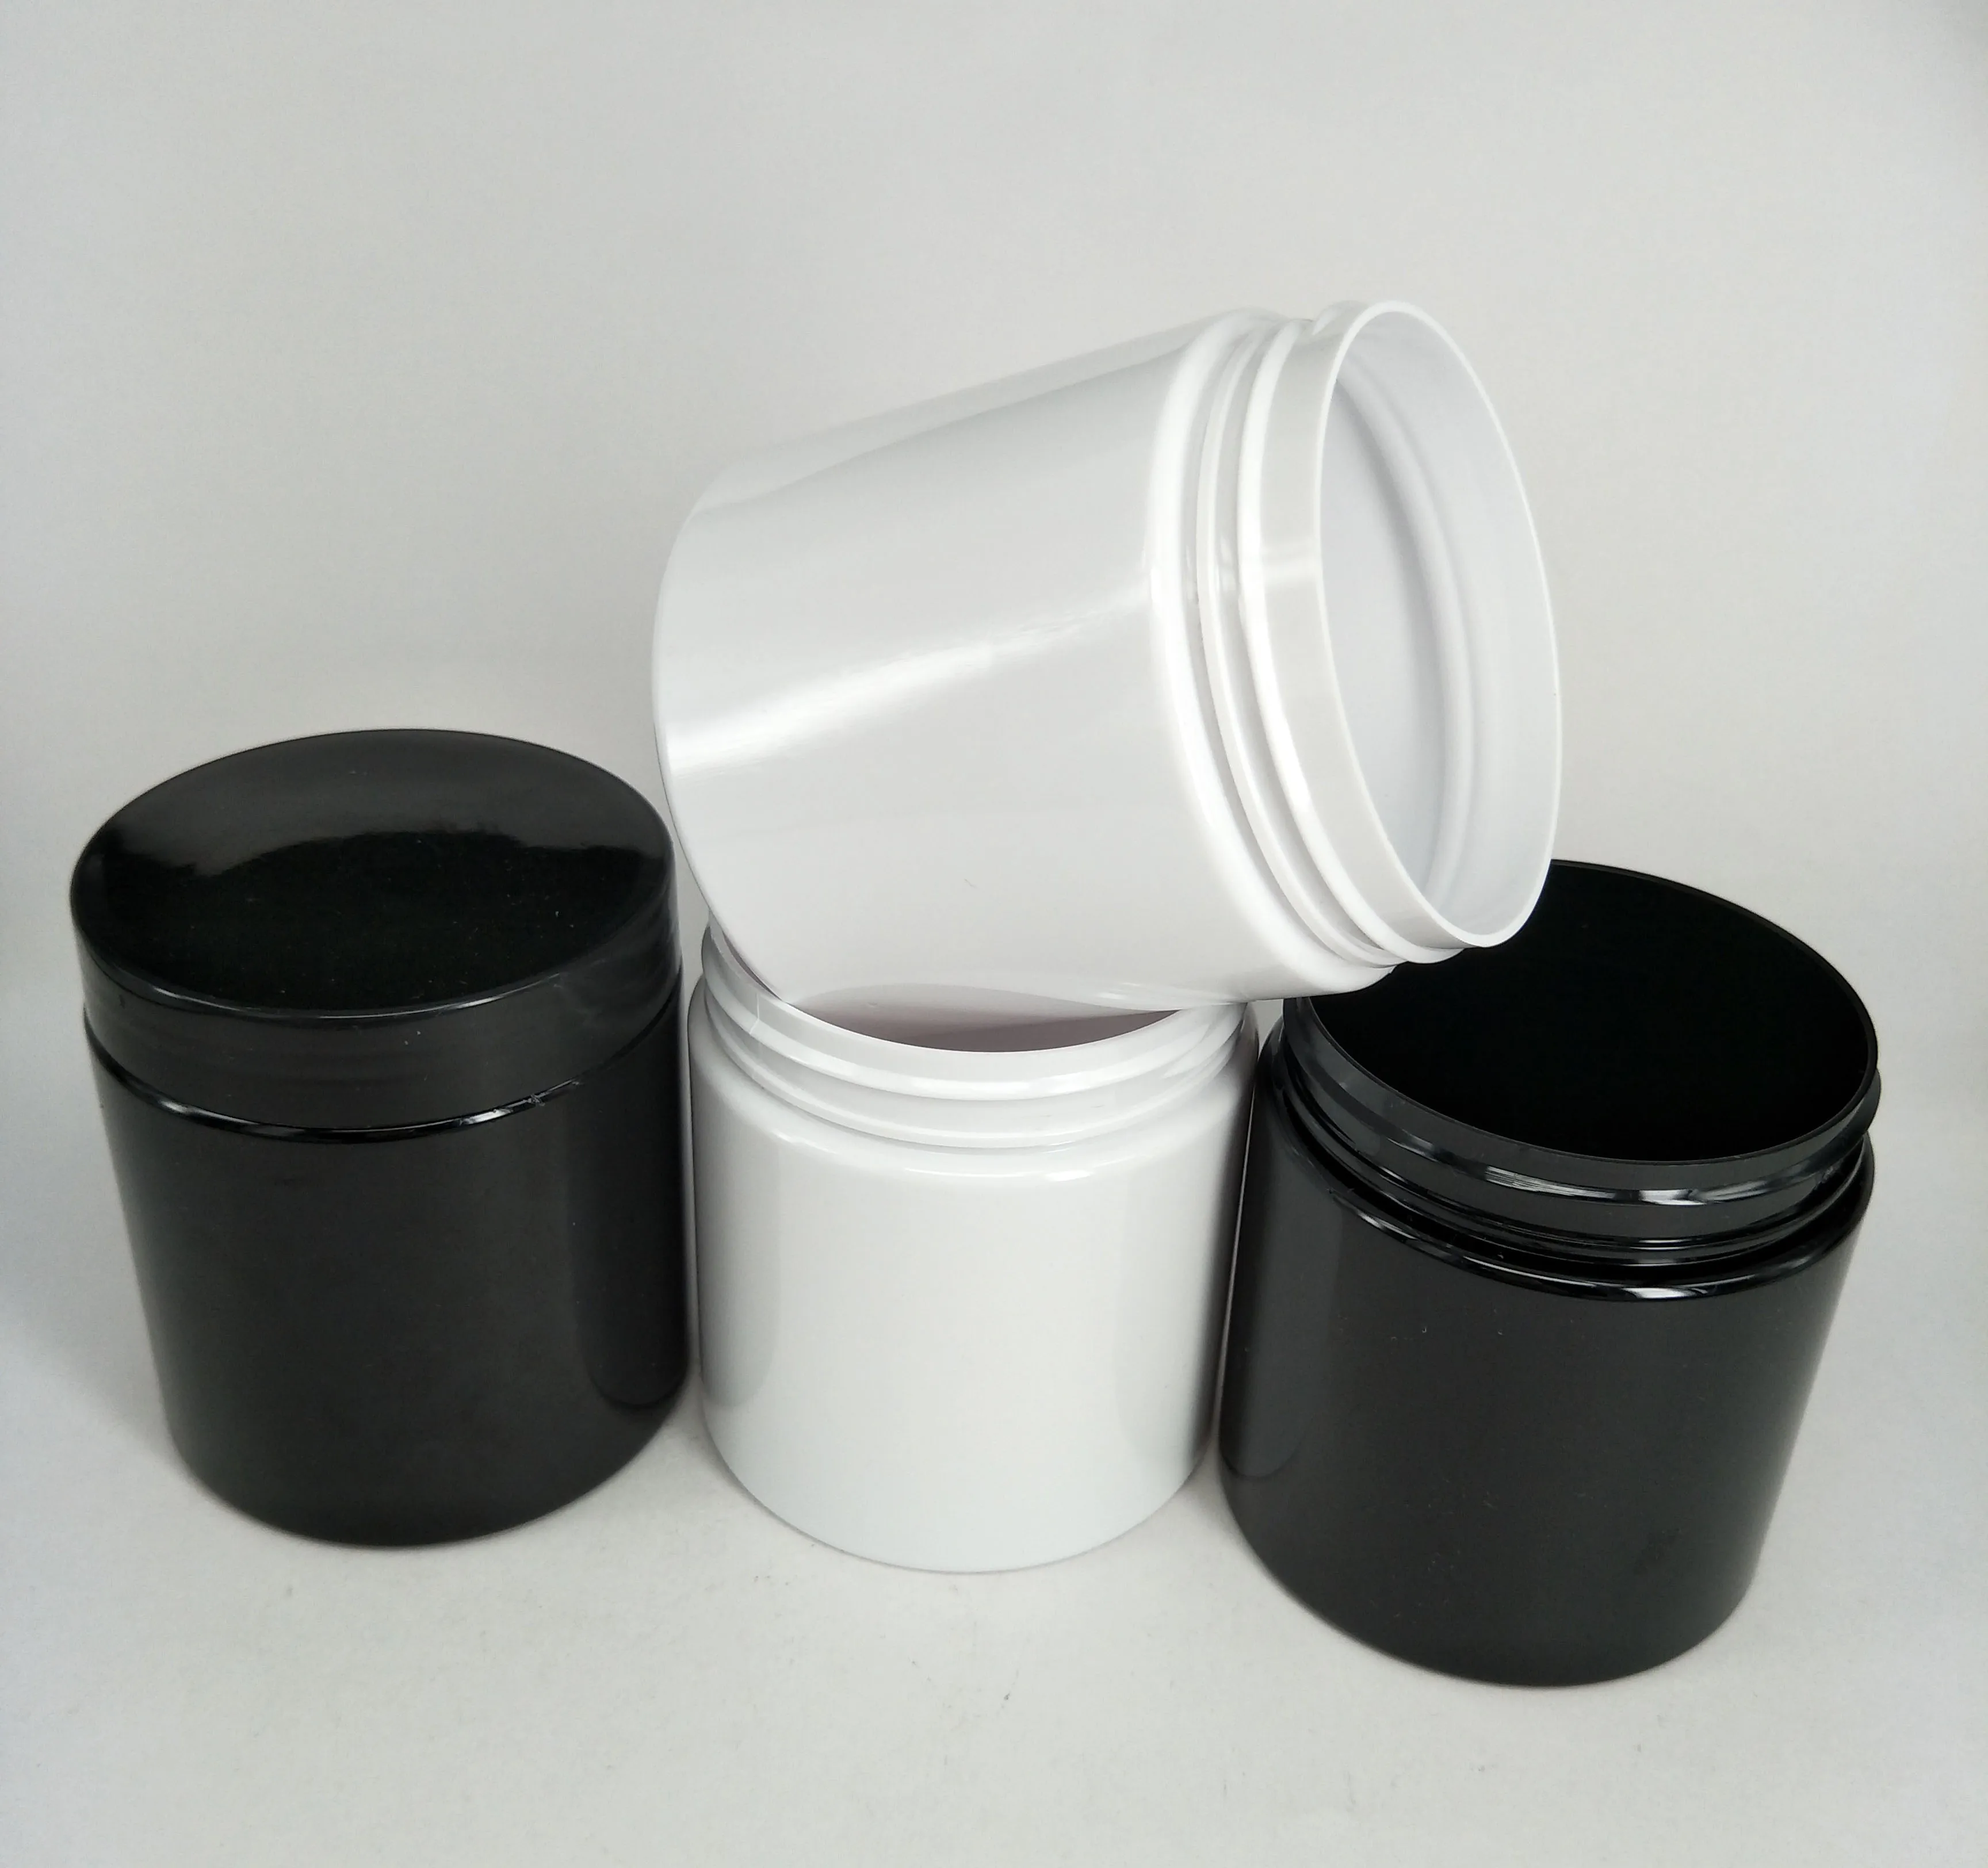 
Black Matte Soft Touch or Shiny black PET Protein Powder Jar 